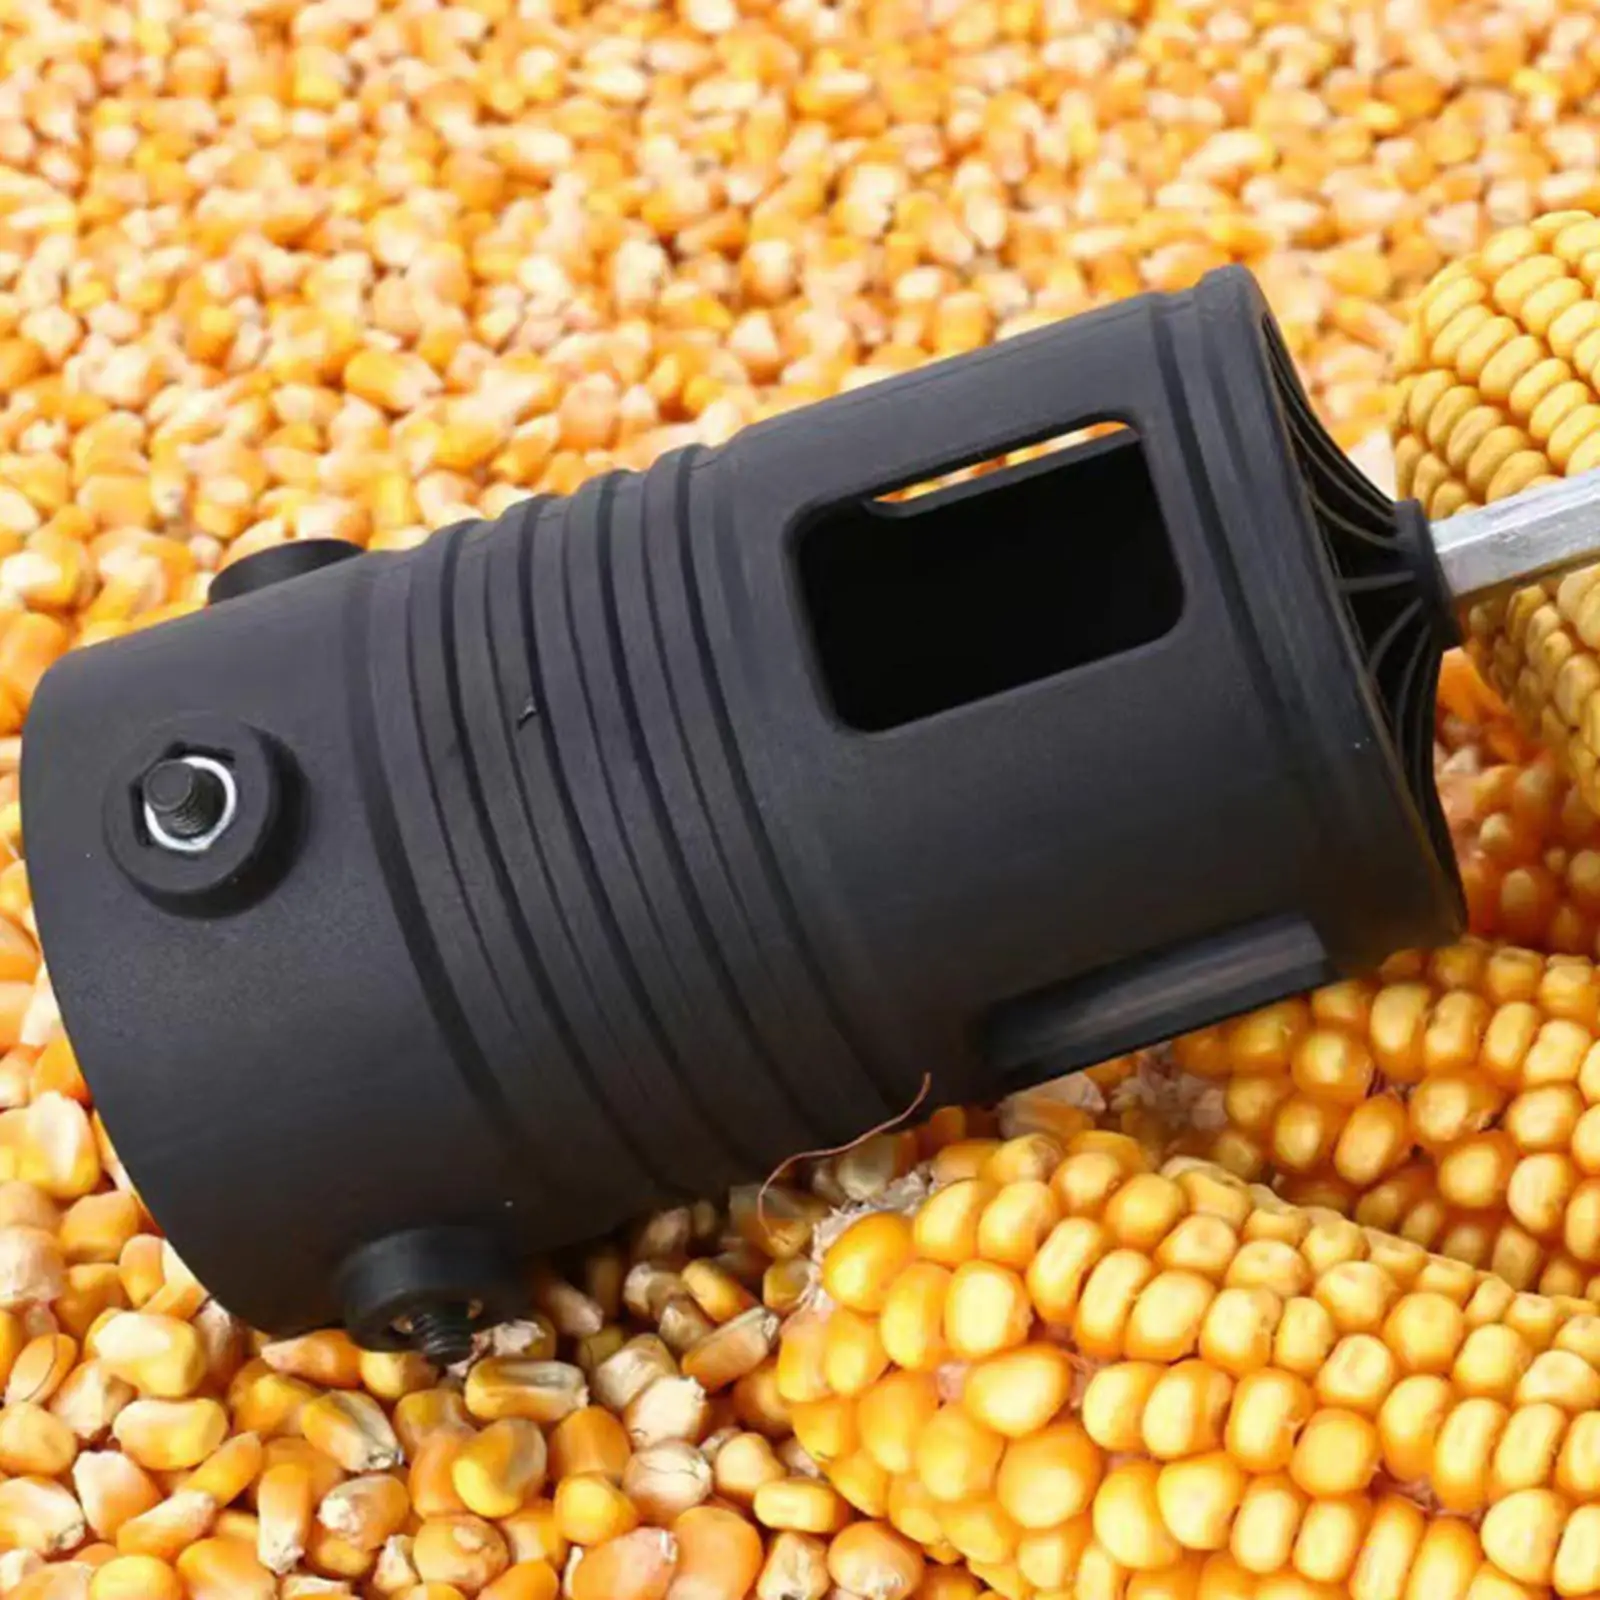 Corn Thresher Strip Tool Hand Drill Kernel Remover Corn Peel Corn Sheller Machine for Restaurant Families Farms